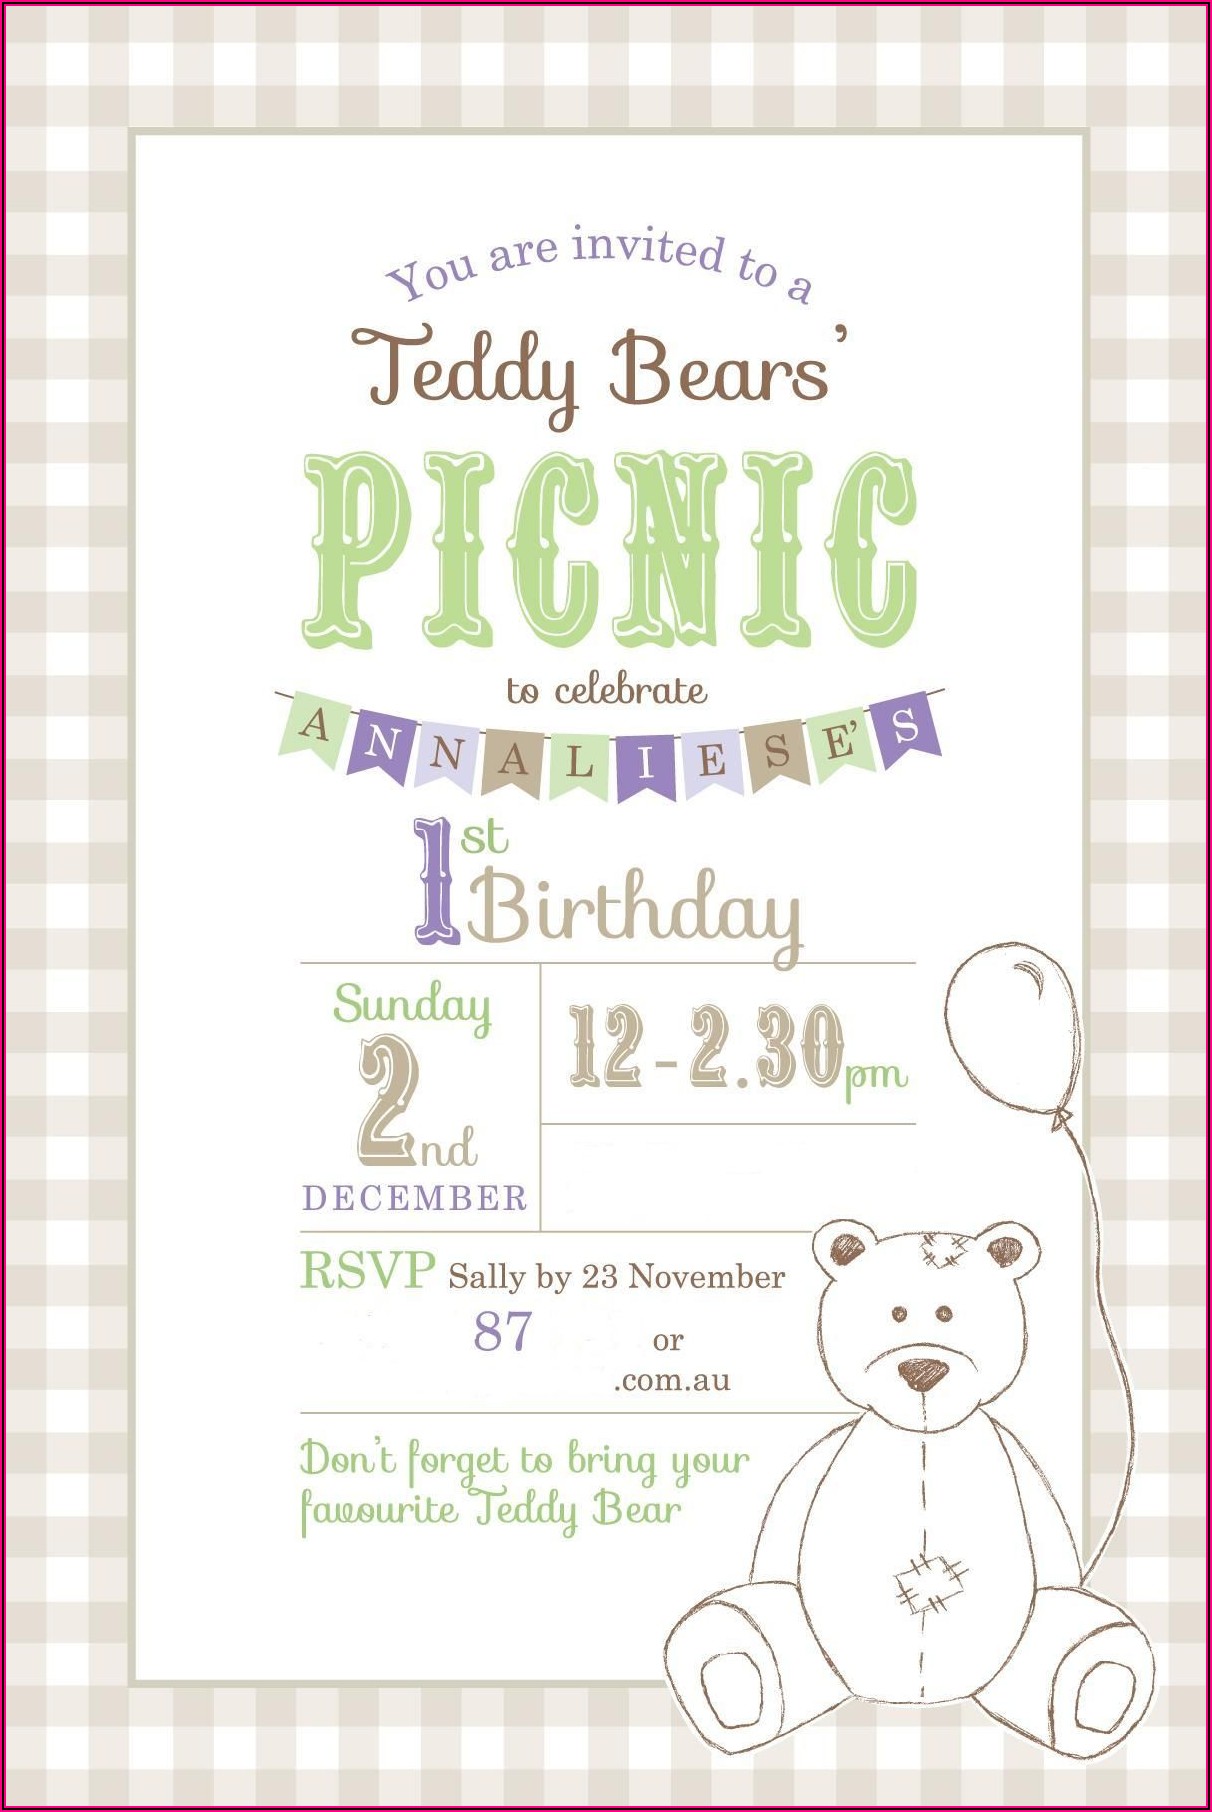 Teddy Bear Picnic Party Invite Template